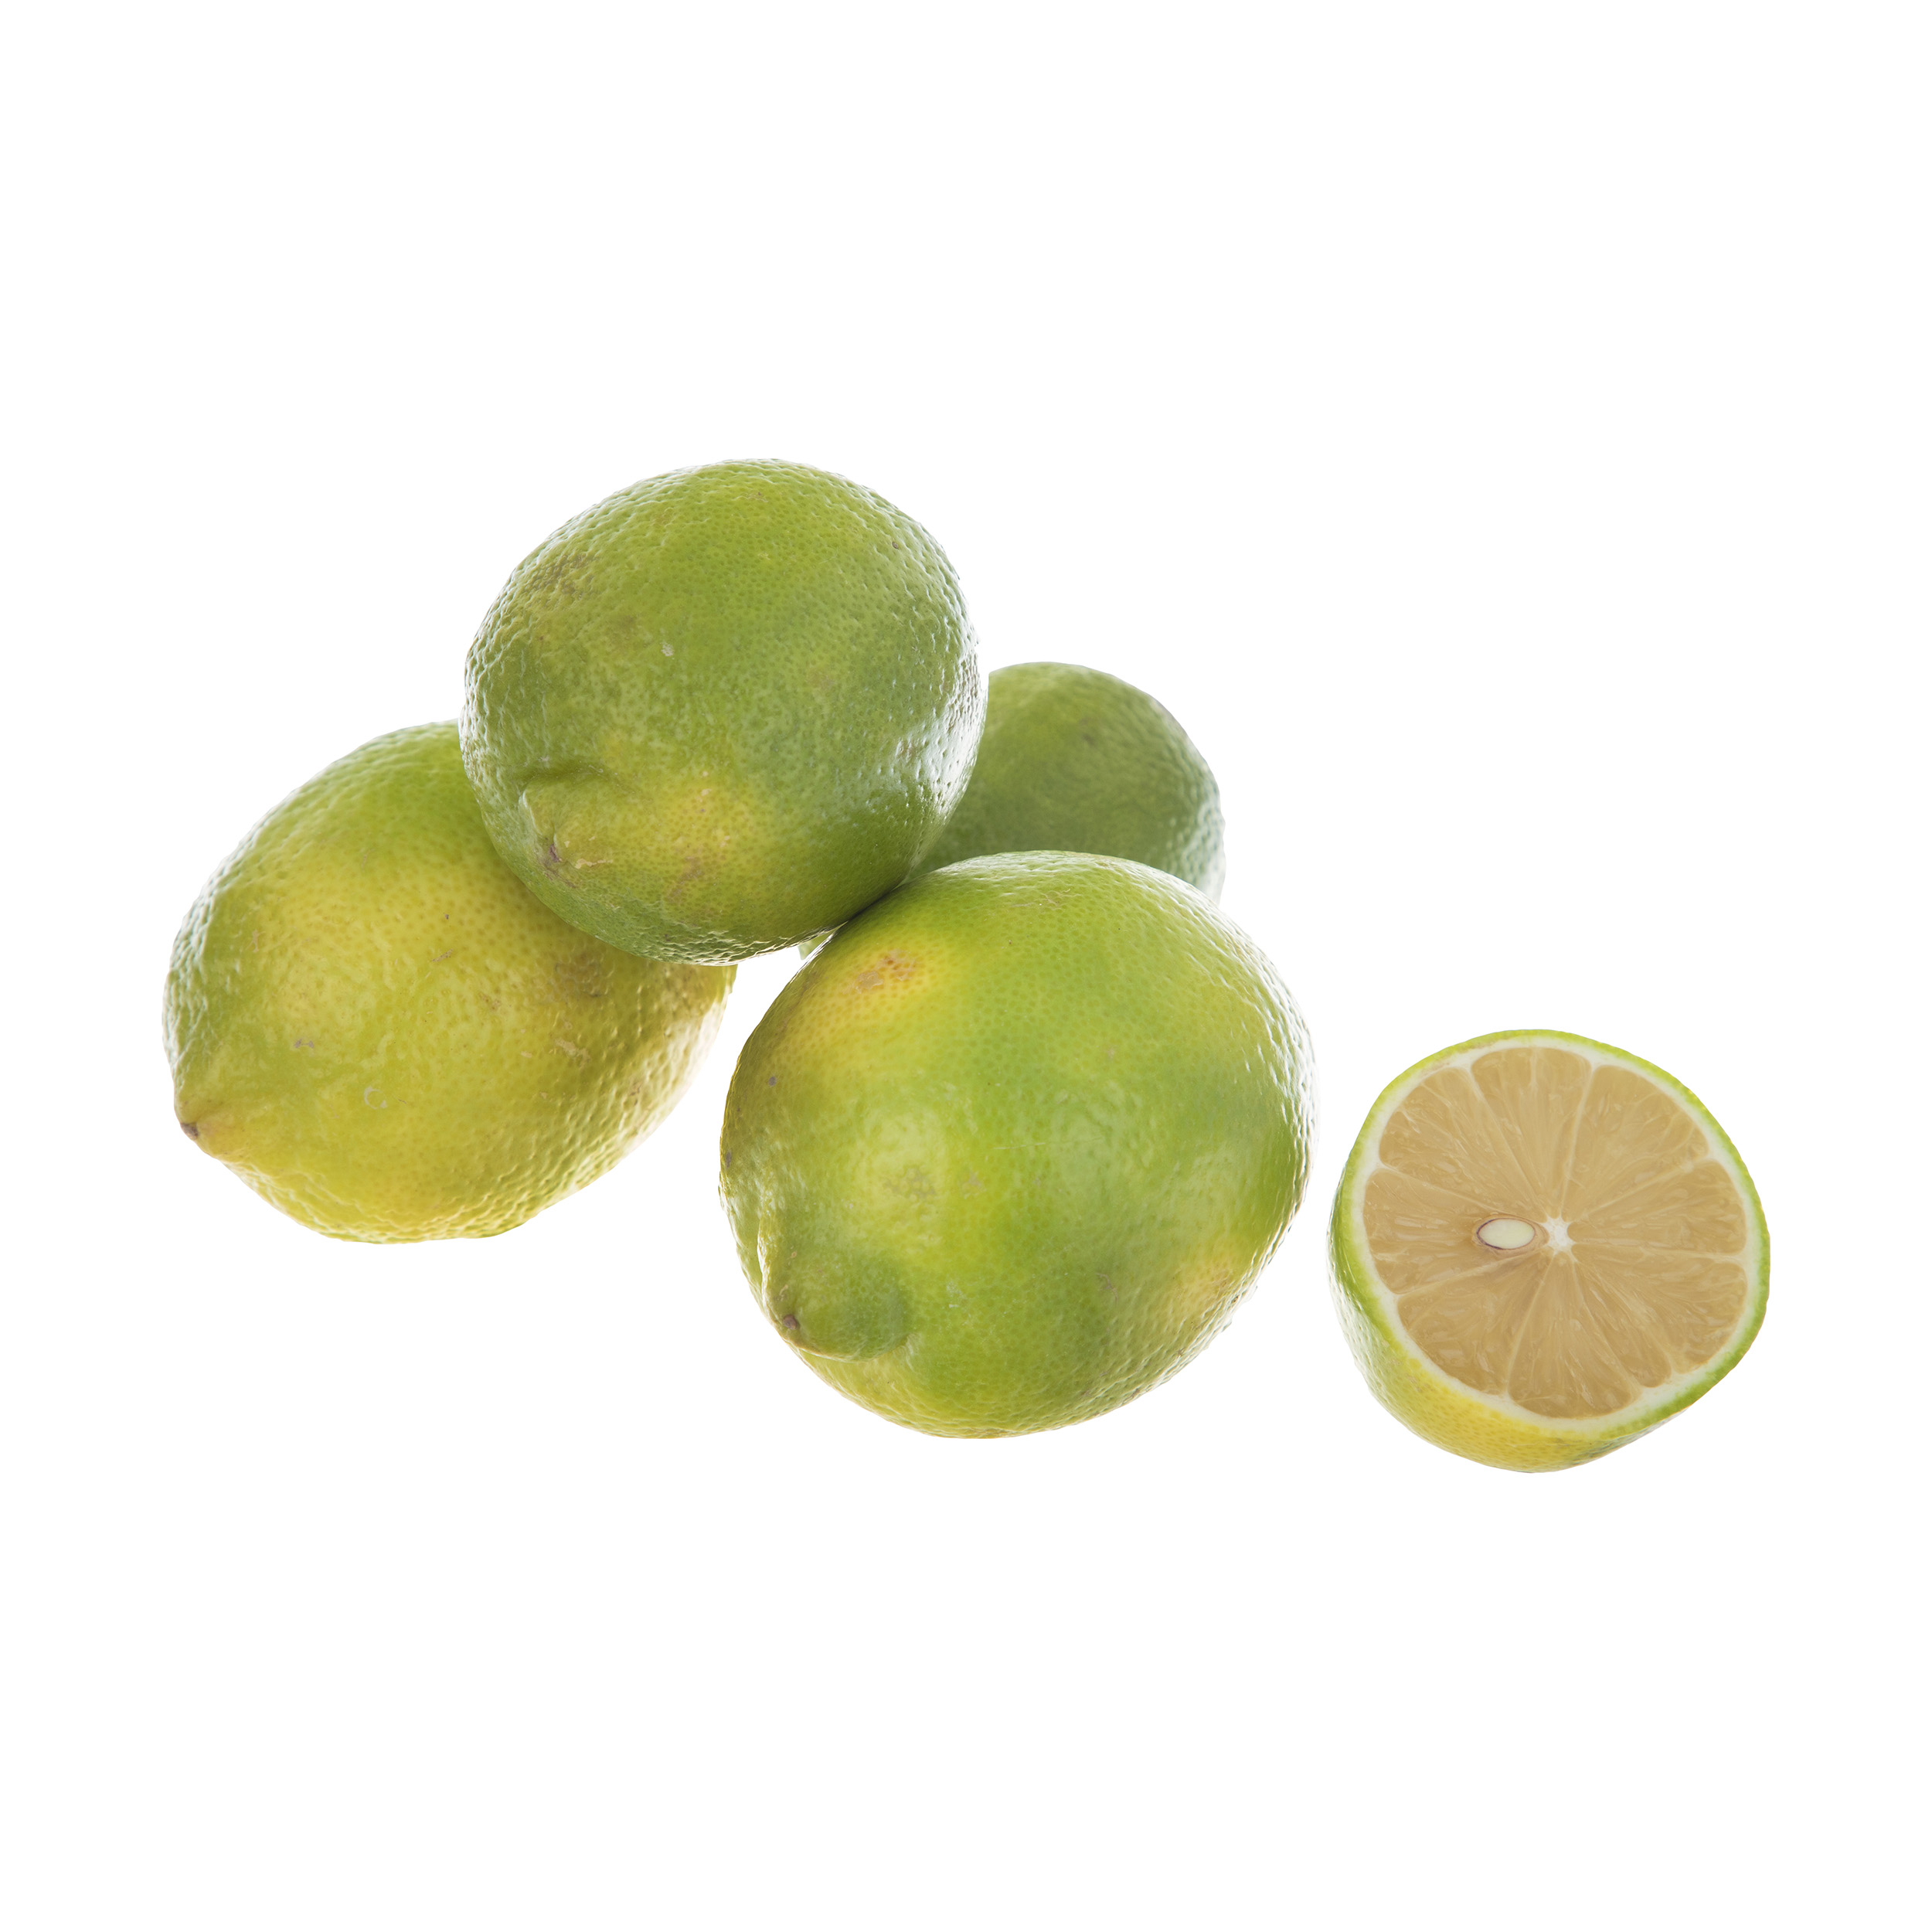 لیمو ترش برزیلی هودکا - مقدار 500 گرم